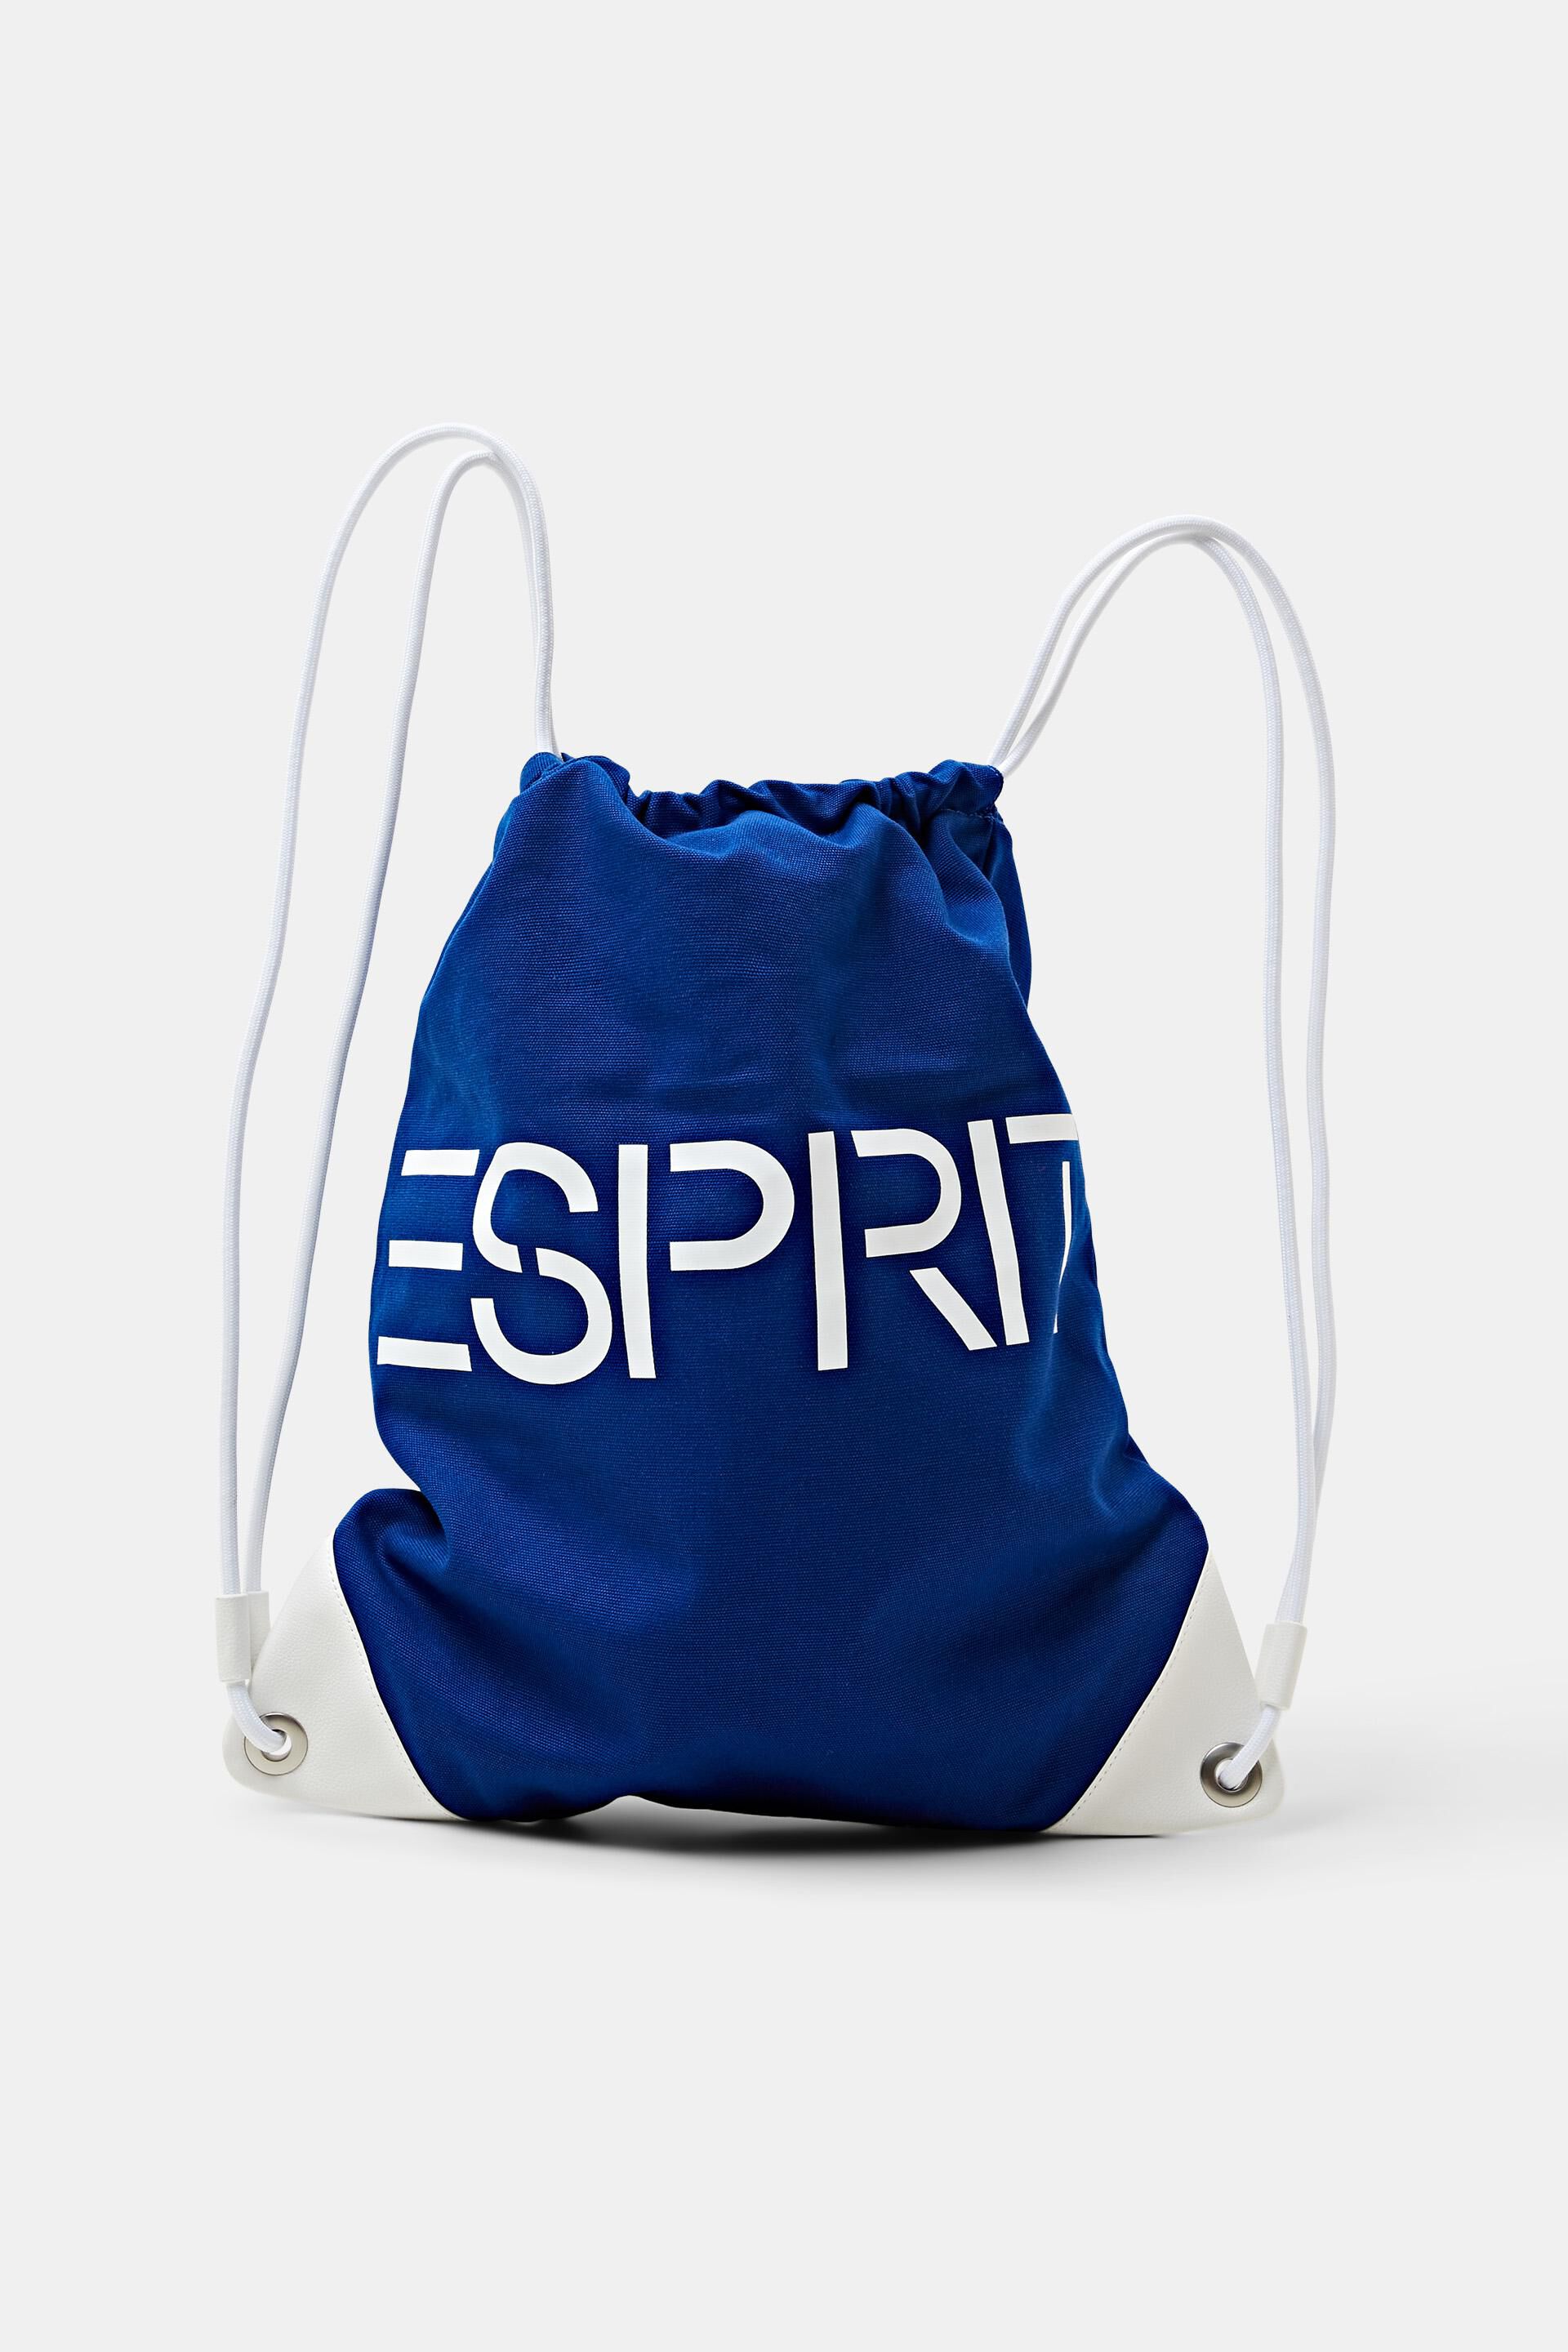 Esprit Backpack Cotton Drawstring Logo Canvas